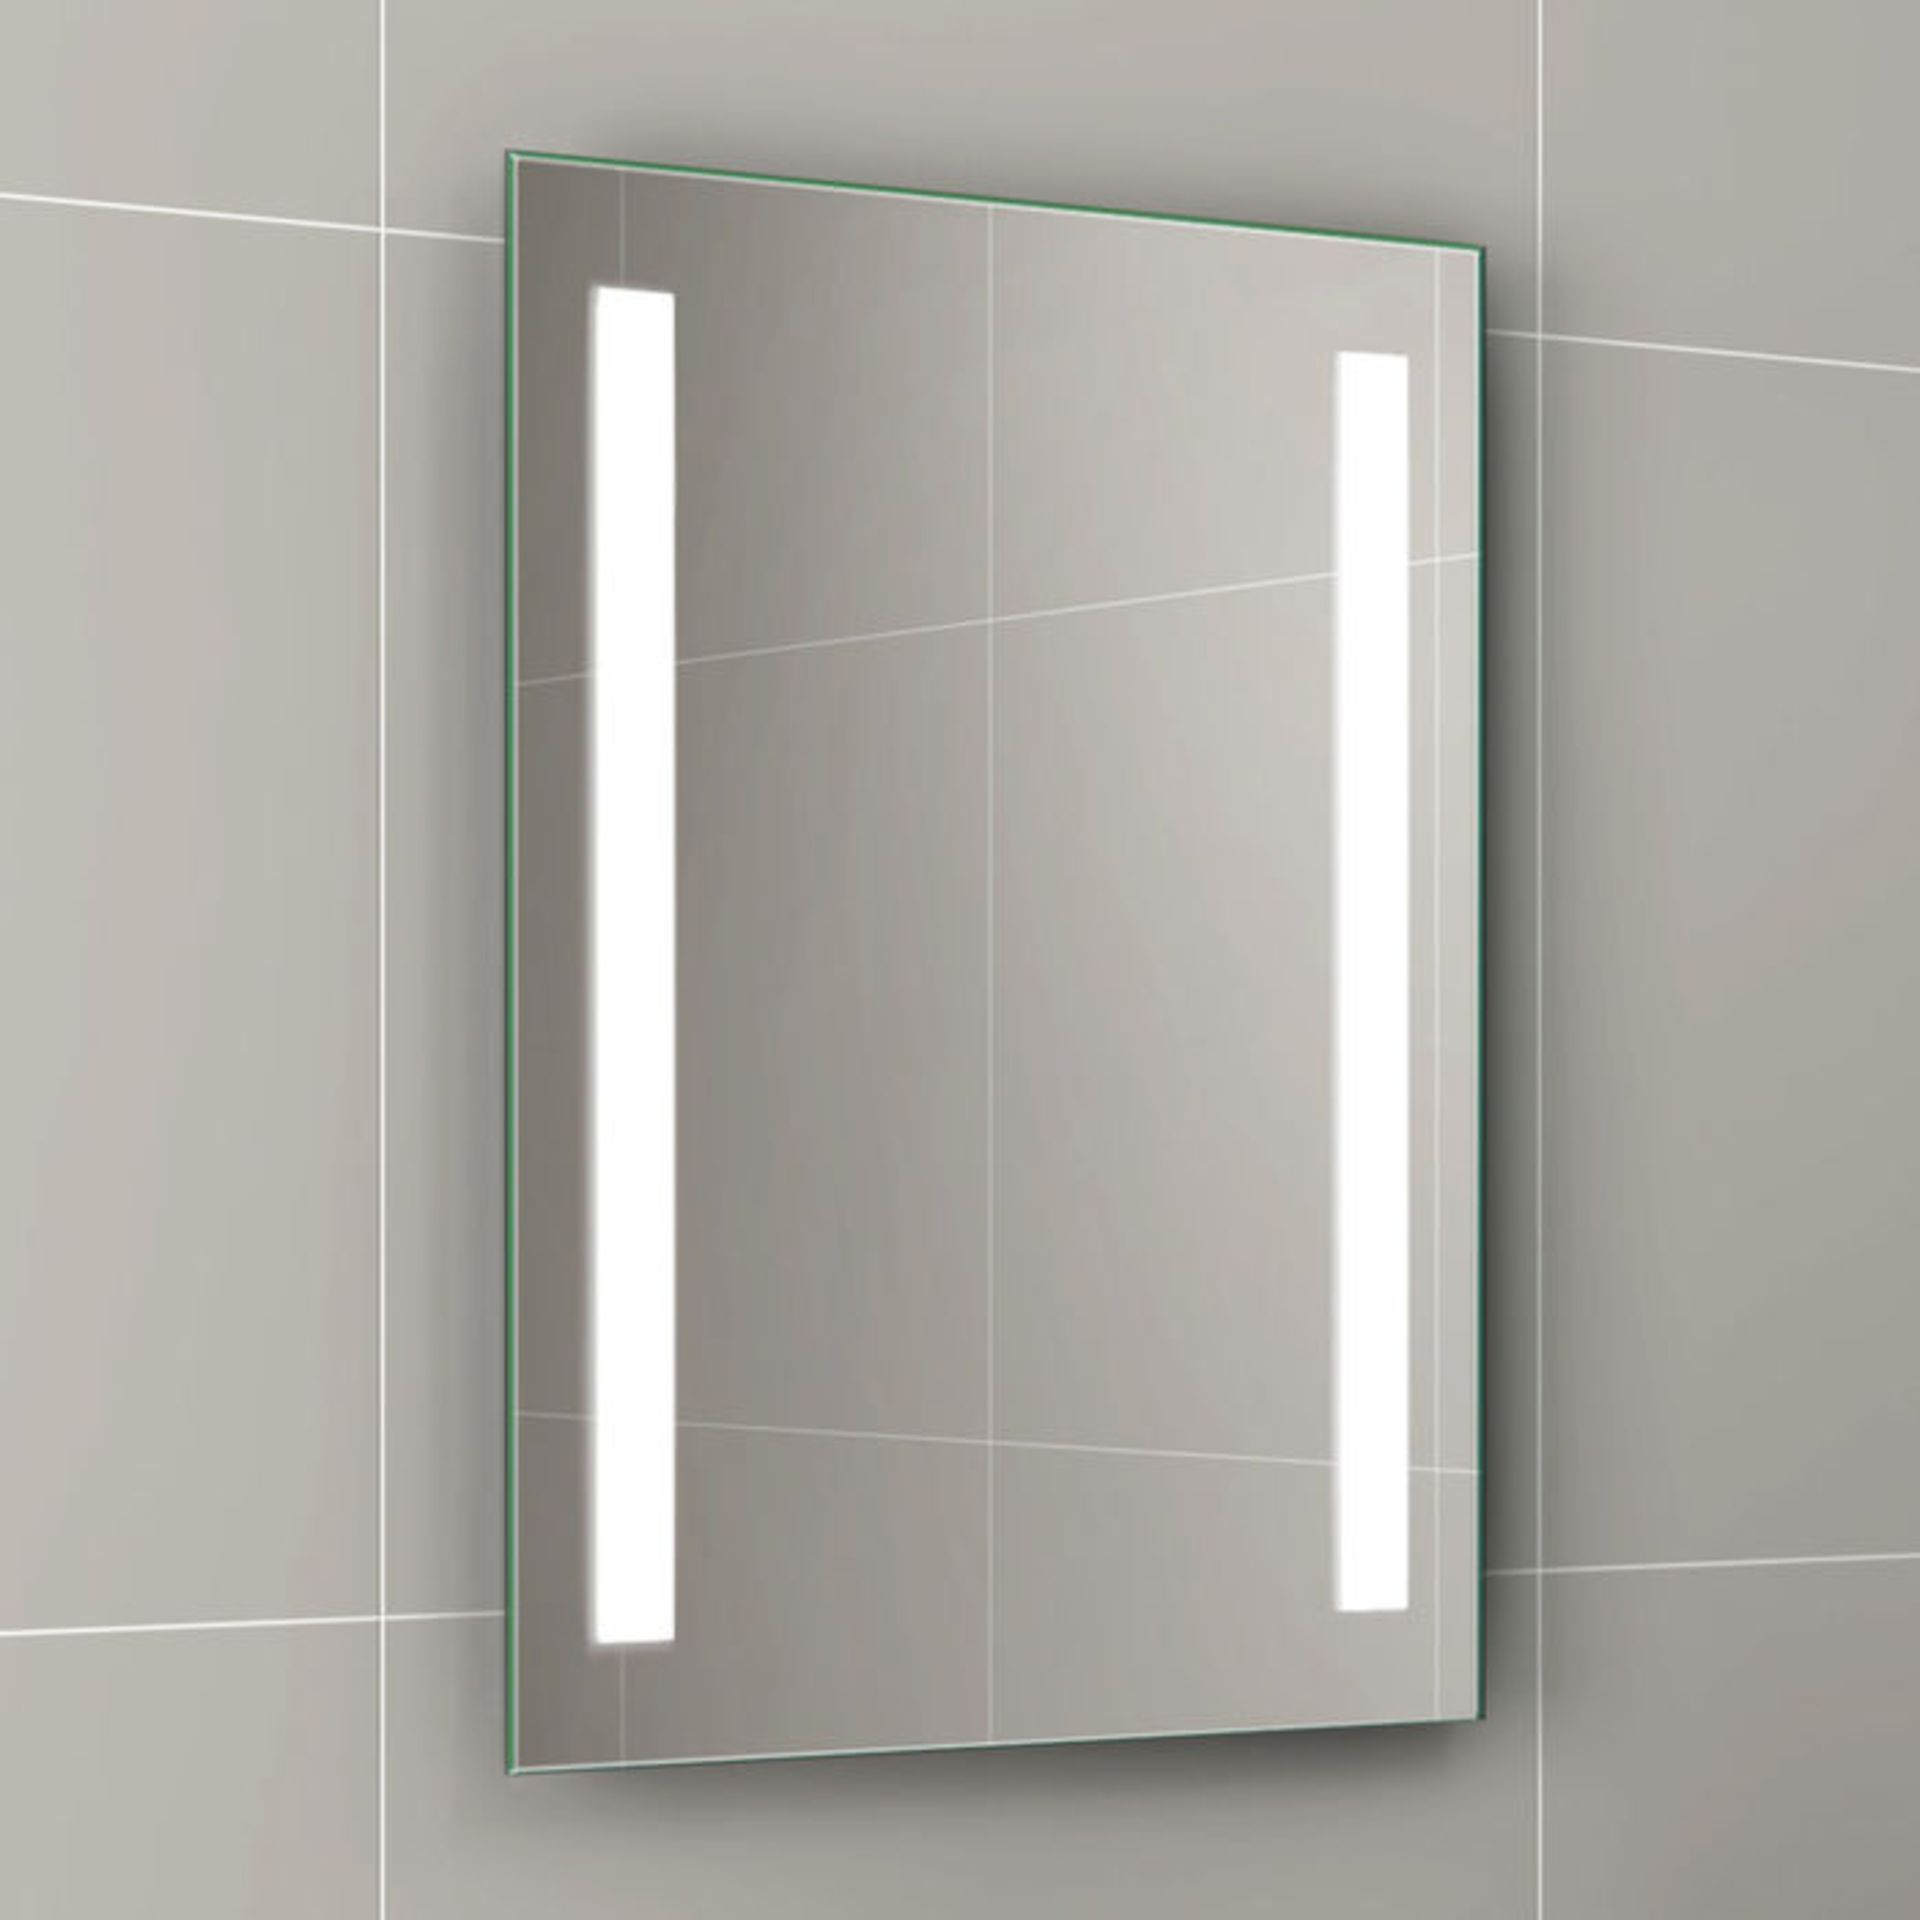 New 600x450mm Omega Illuminated Led Mirror. Ml2108.Energy Saving Controlled On / Off Switch Co... - Image 2 of 3